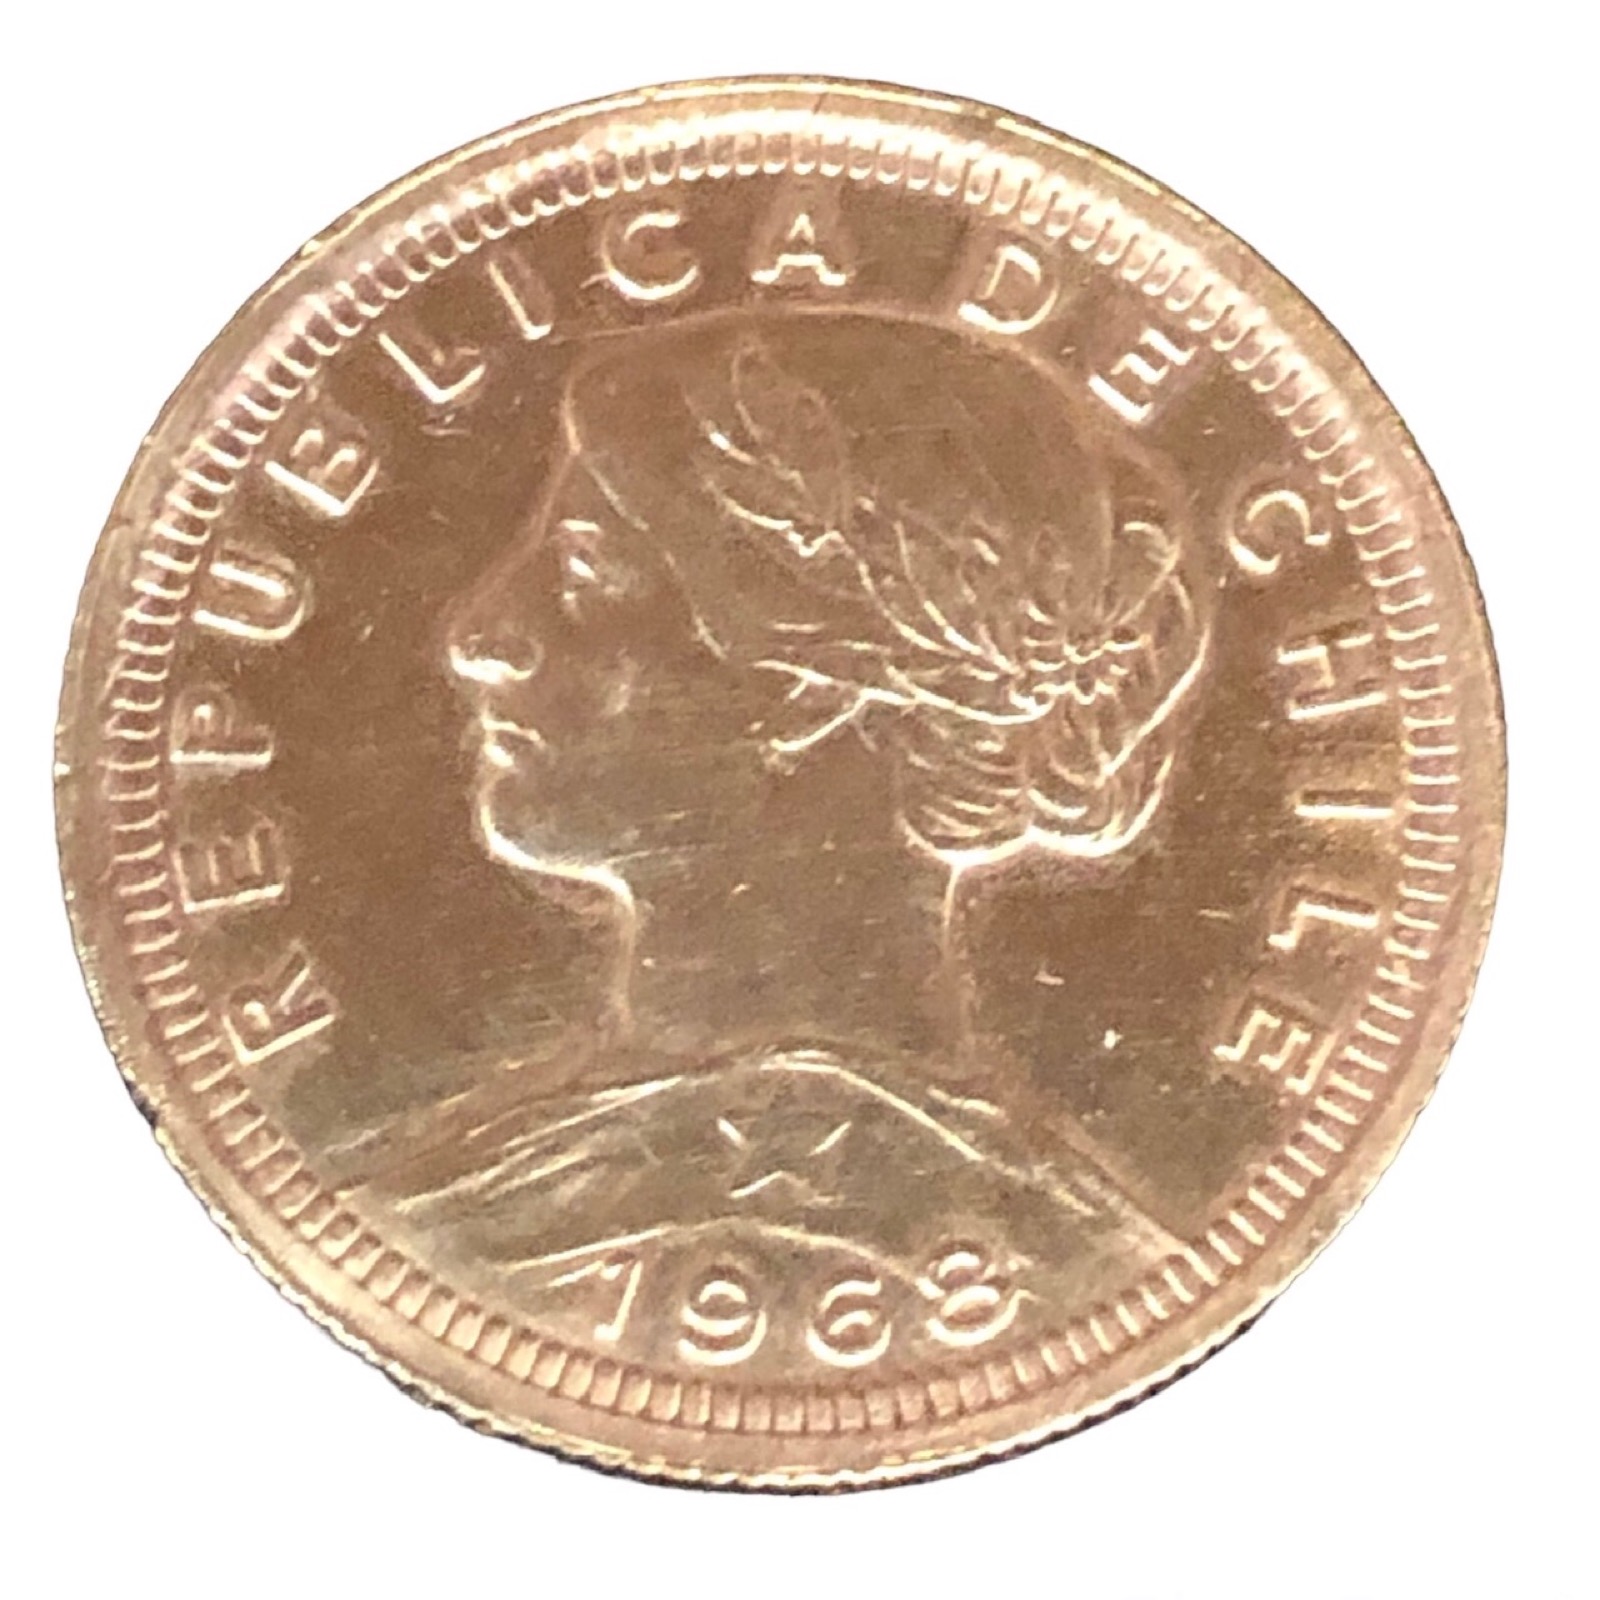 100 Pesos Chiliens / 10 Condores 1968